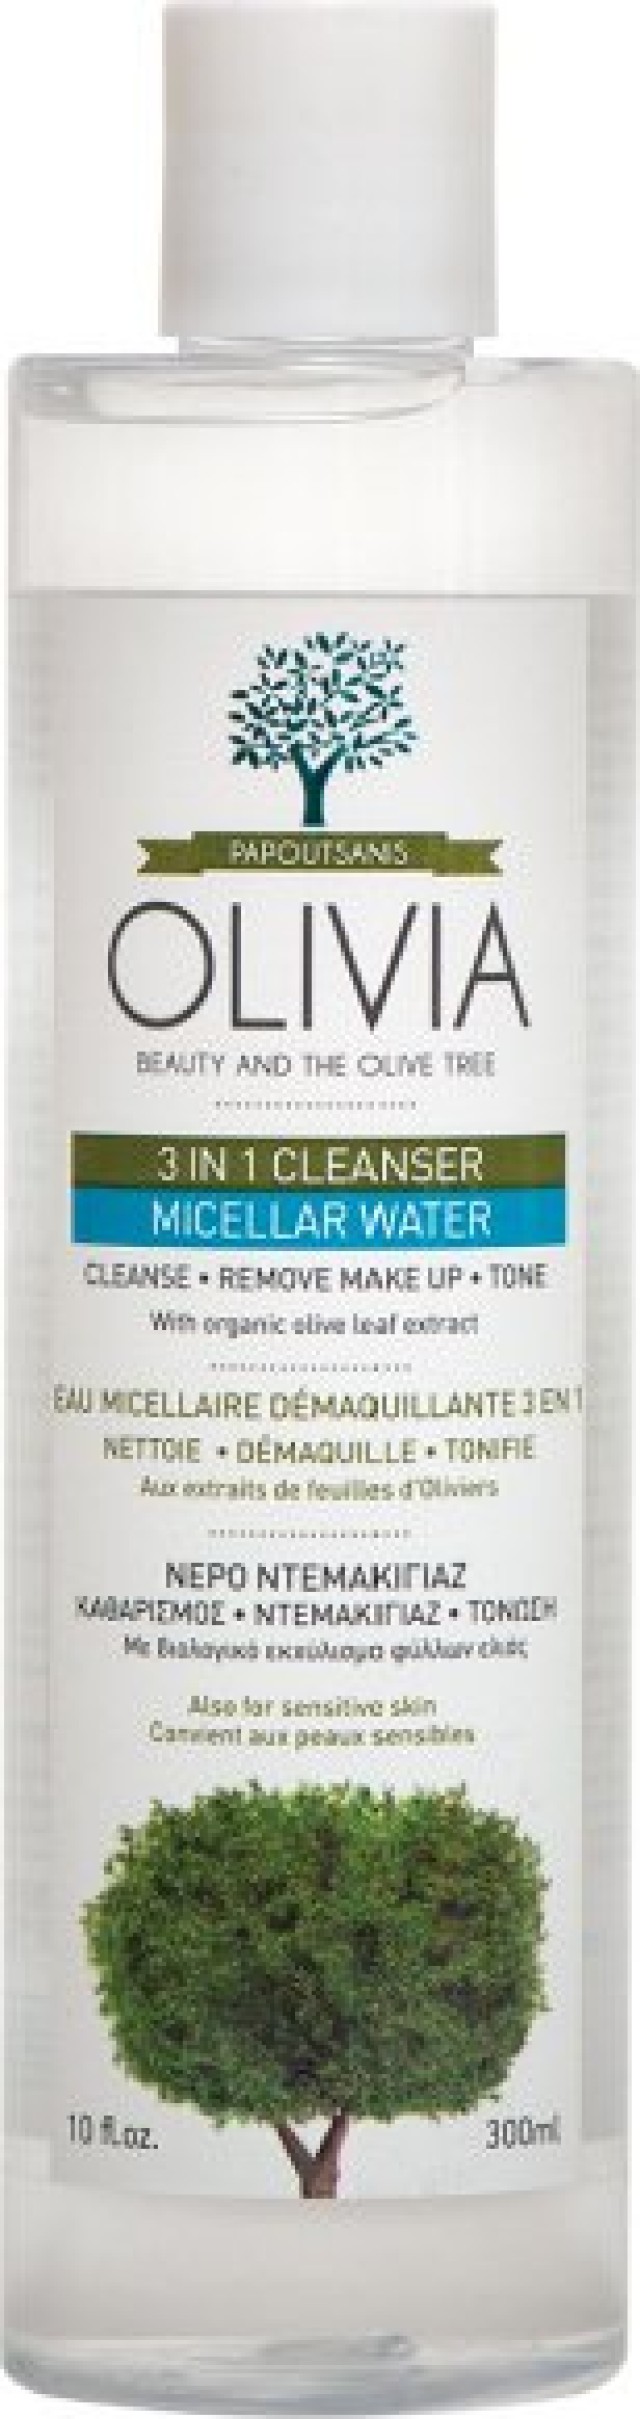 Olivia Cleanser Micellar Water 3 in 1, Νερό Ντεμακιγιάζ 300ml